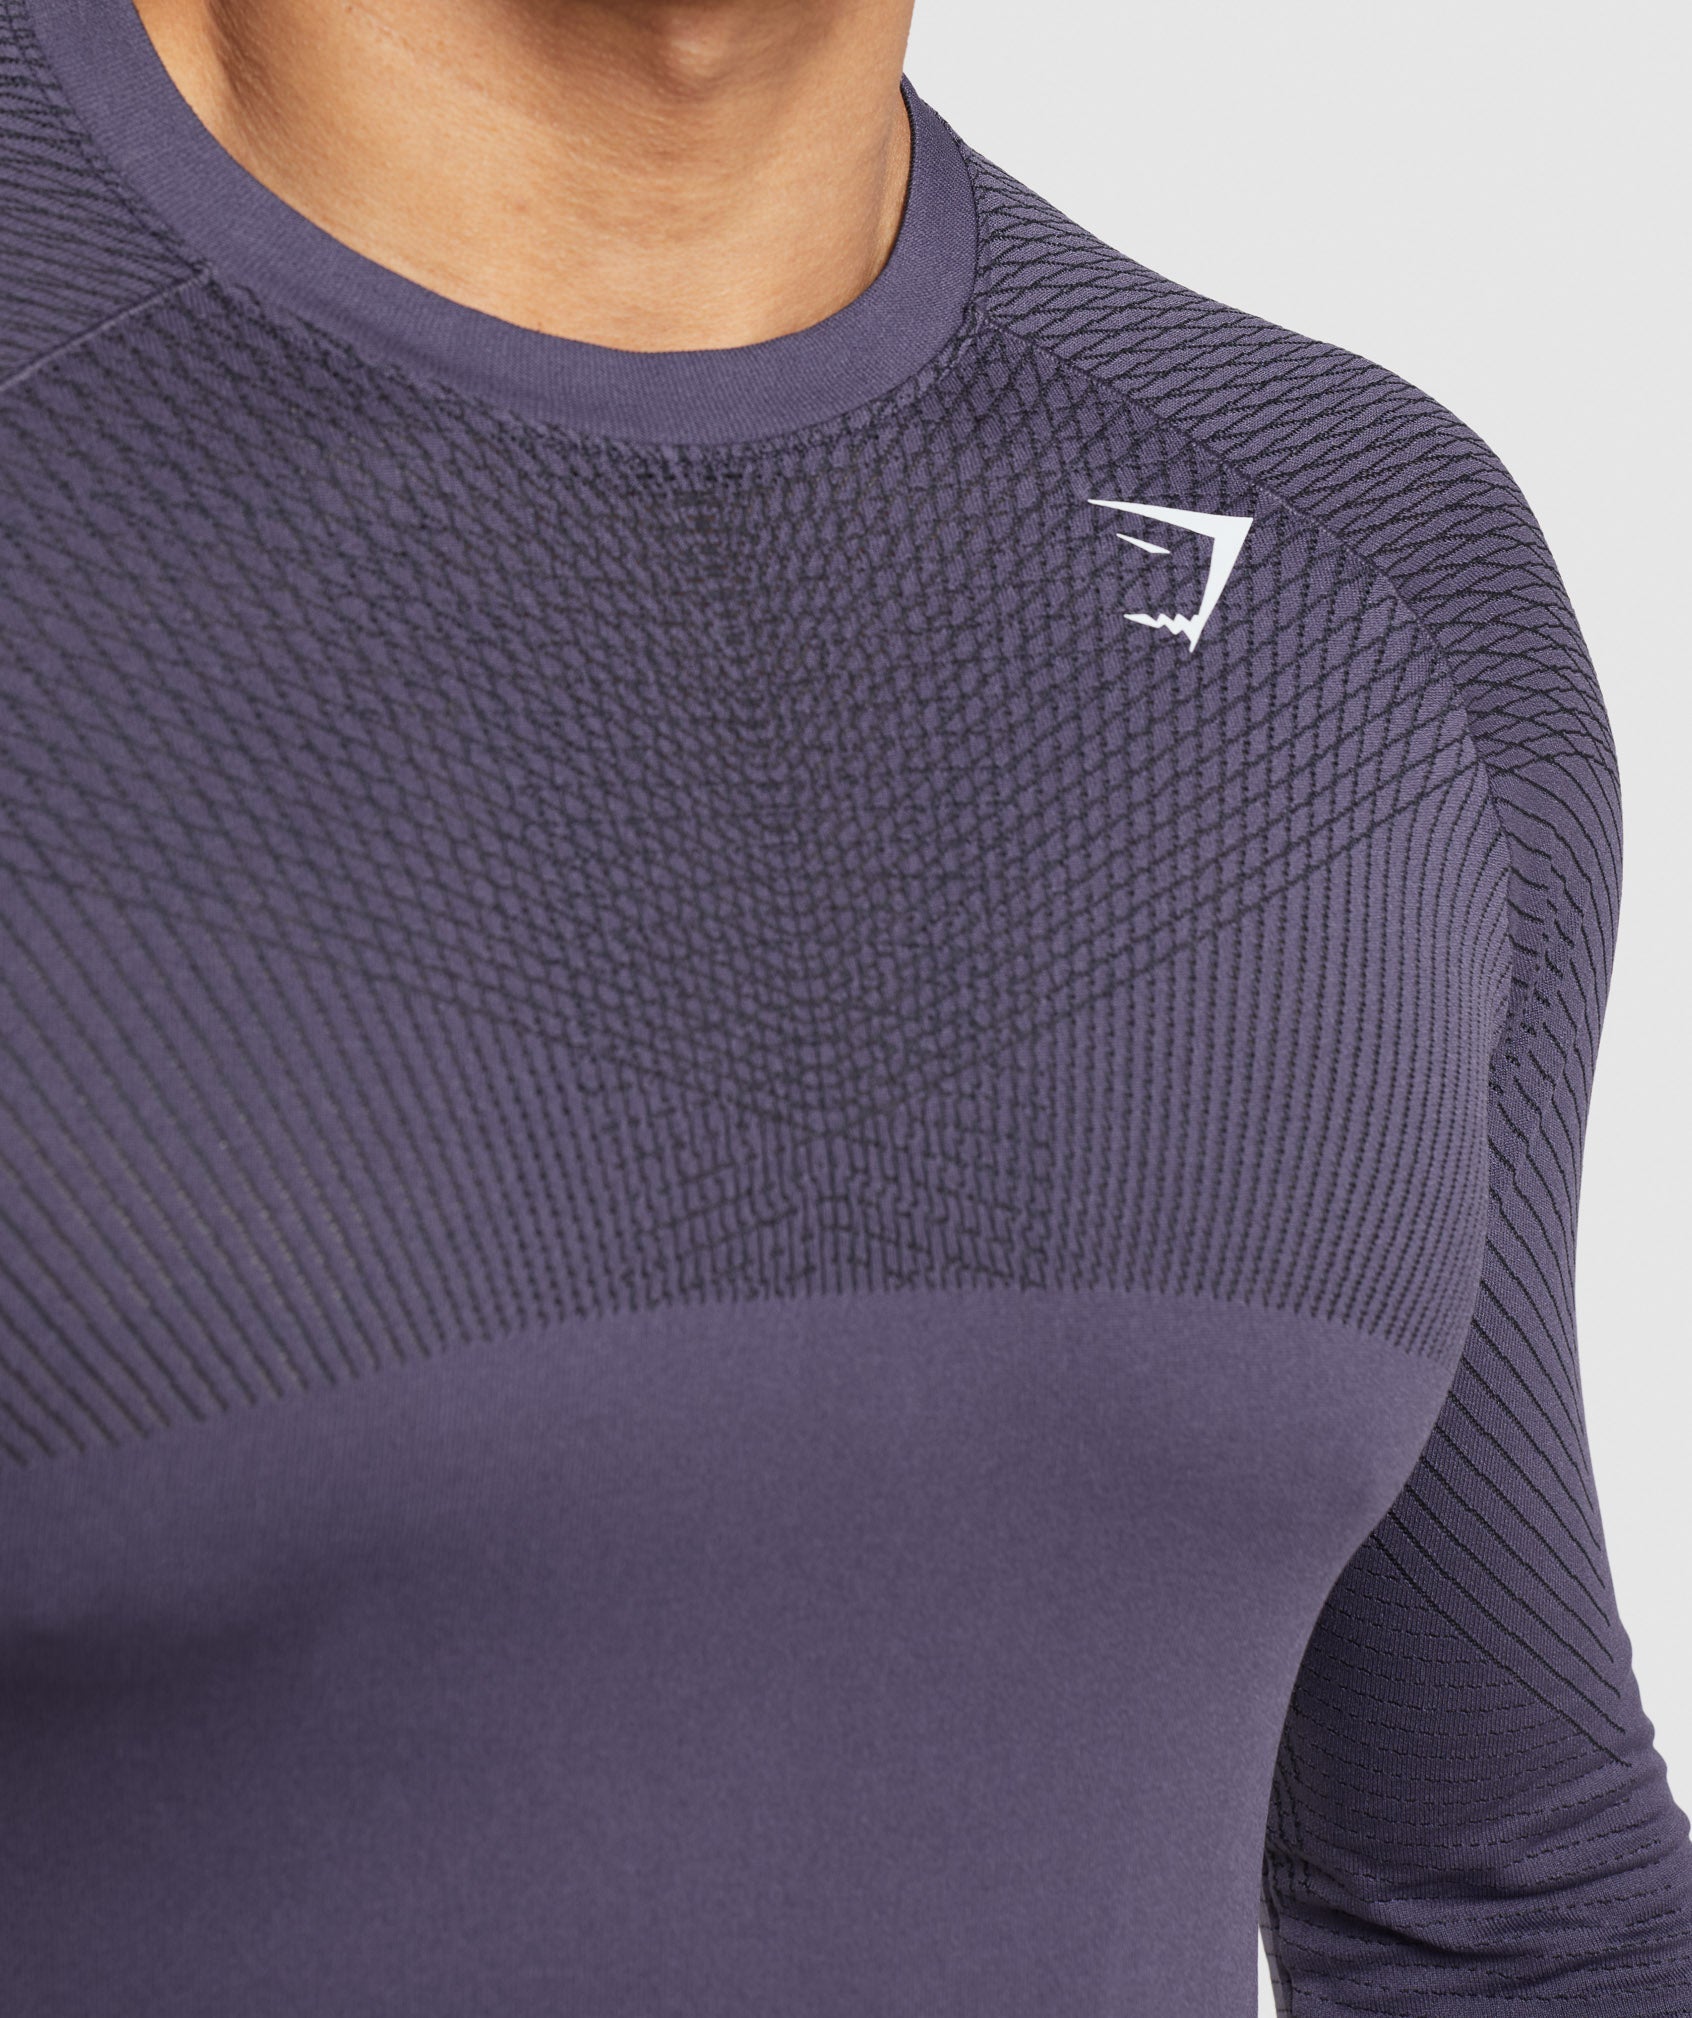 Apex Seamless Long Sleeve T-Shirt in Rich Purple/Black - view 5